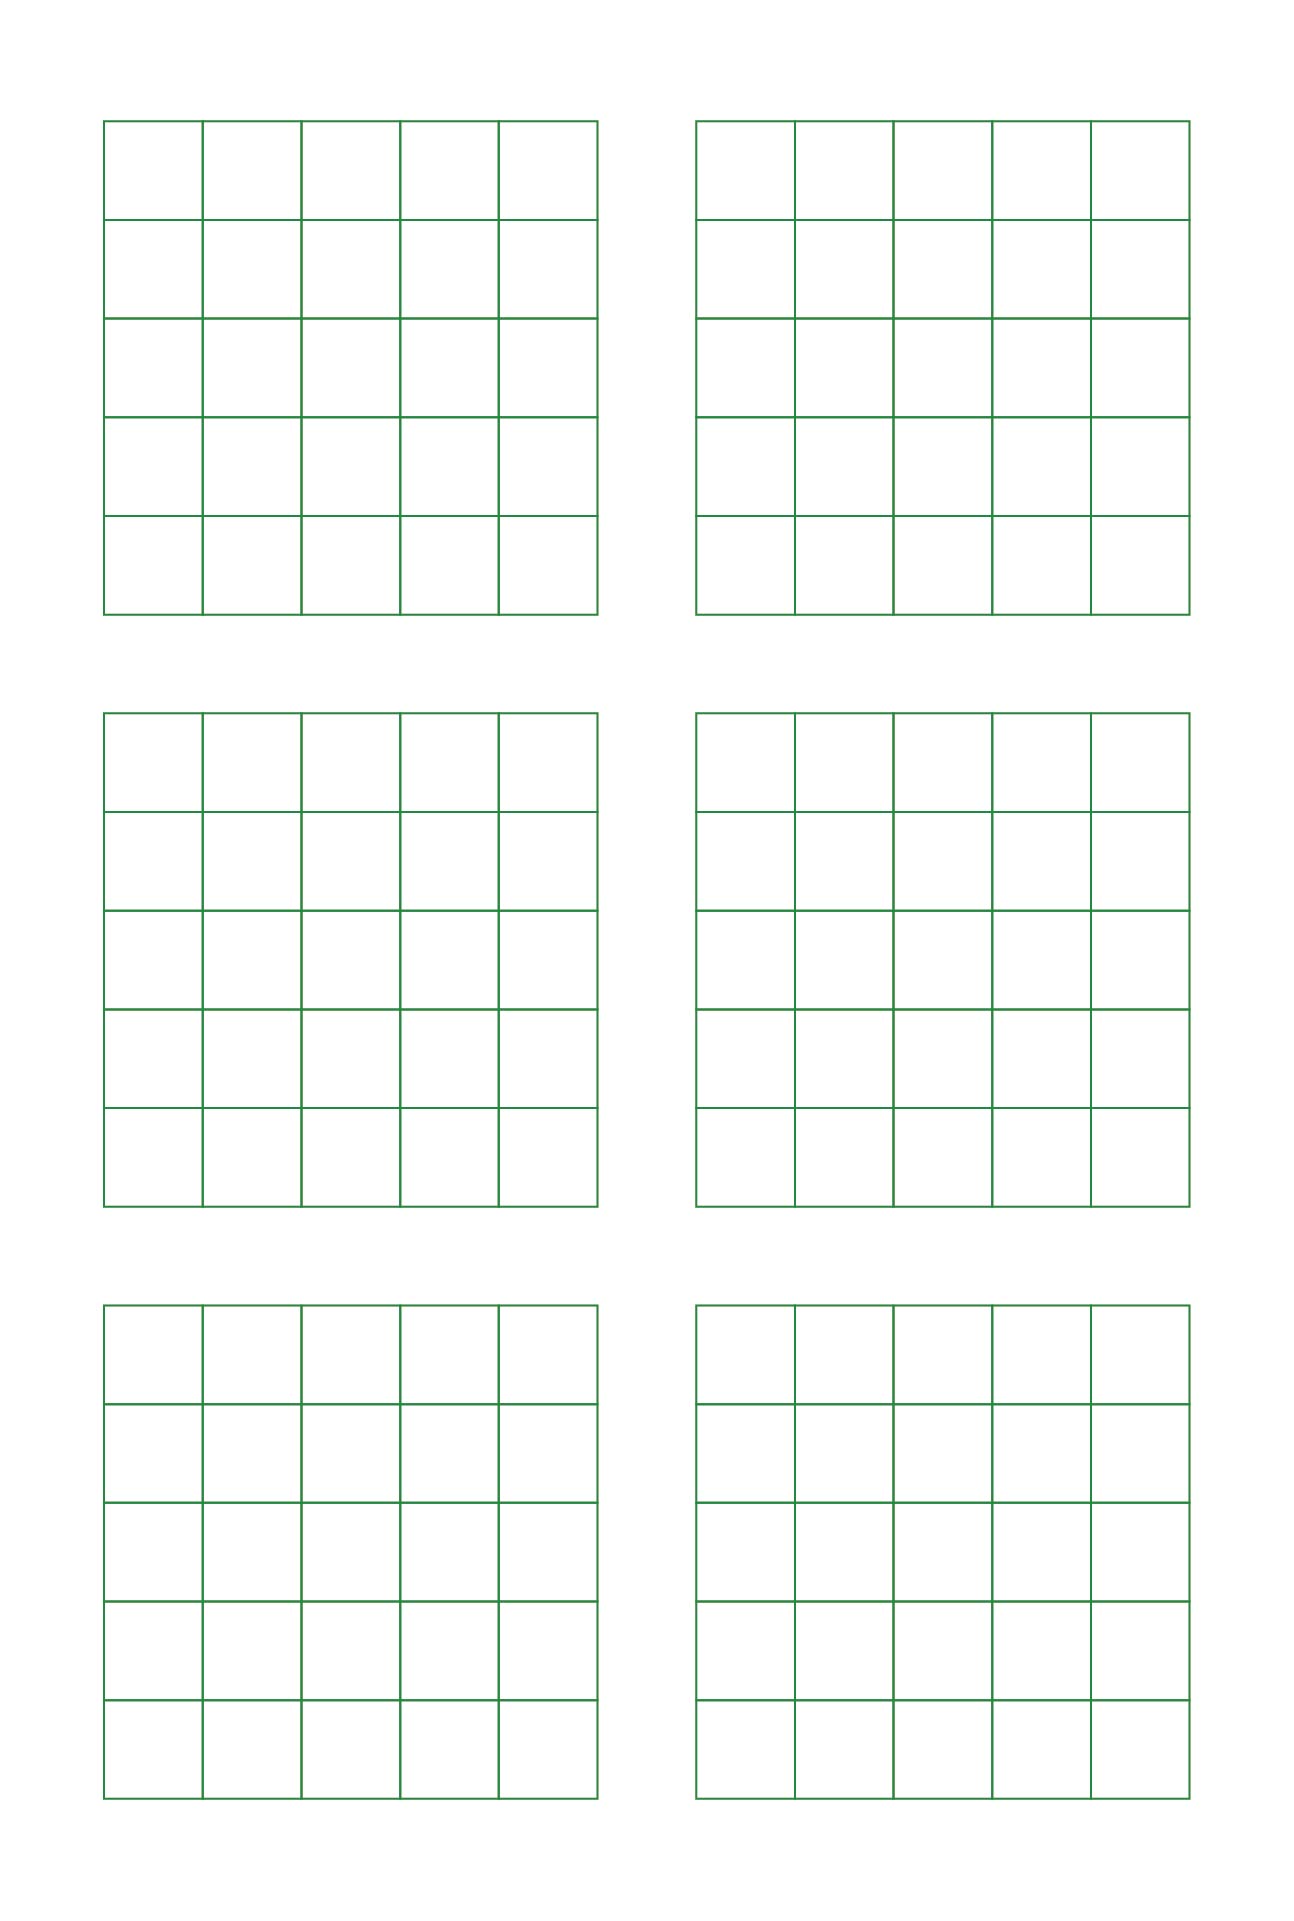 Printable Maths Grids - 5x5 Grids